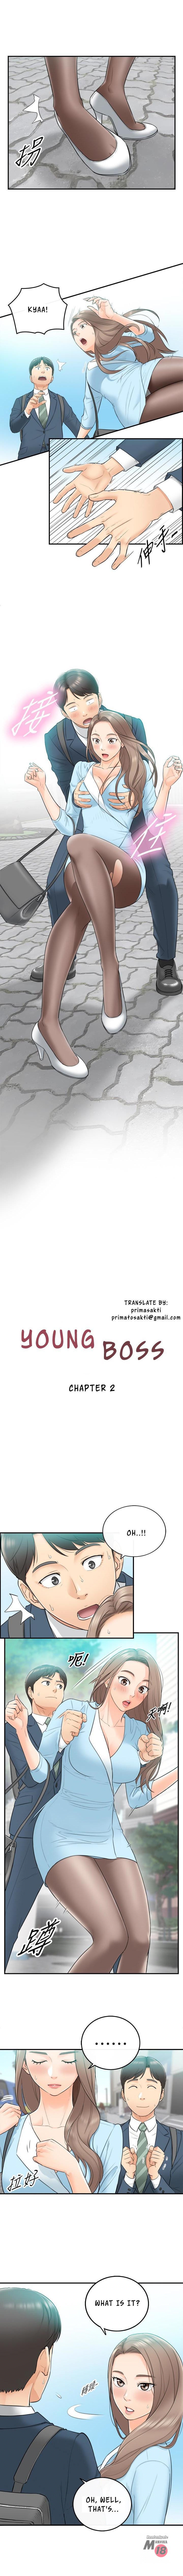 young-boss-001-chap-2-0